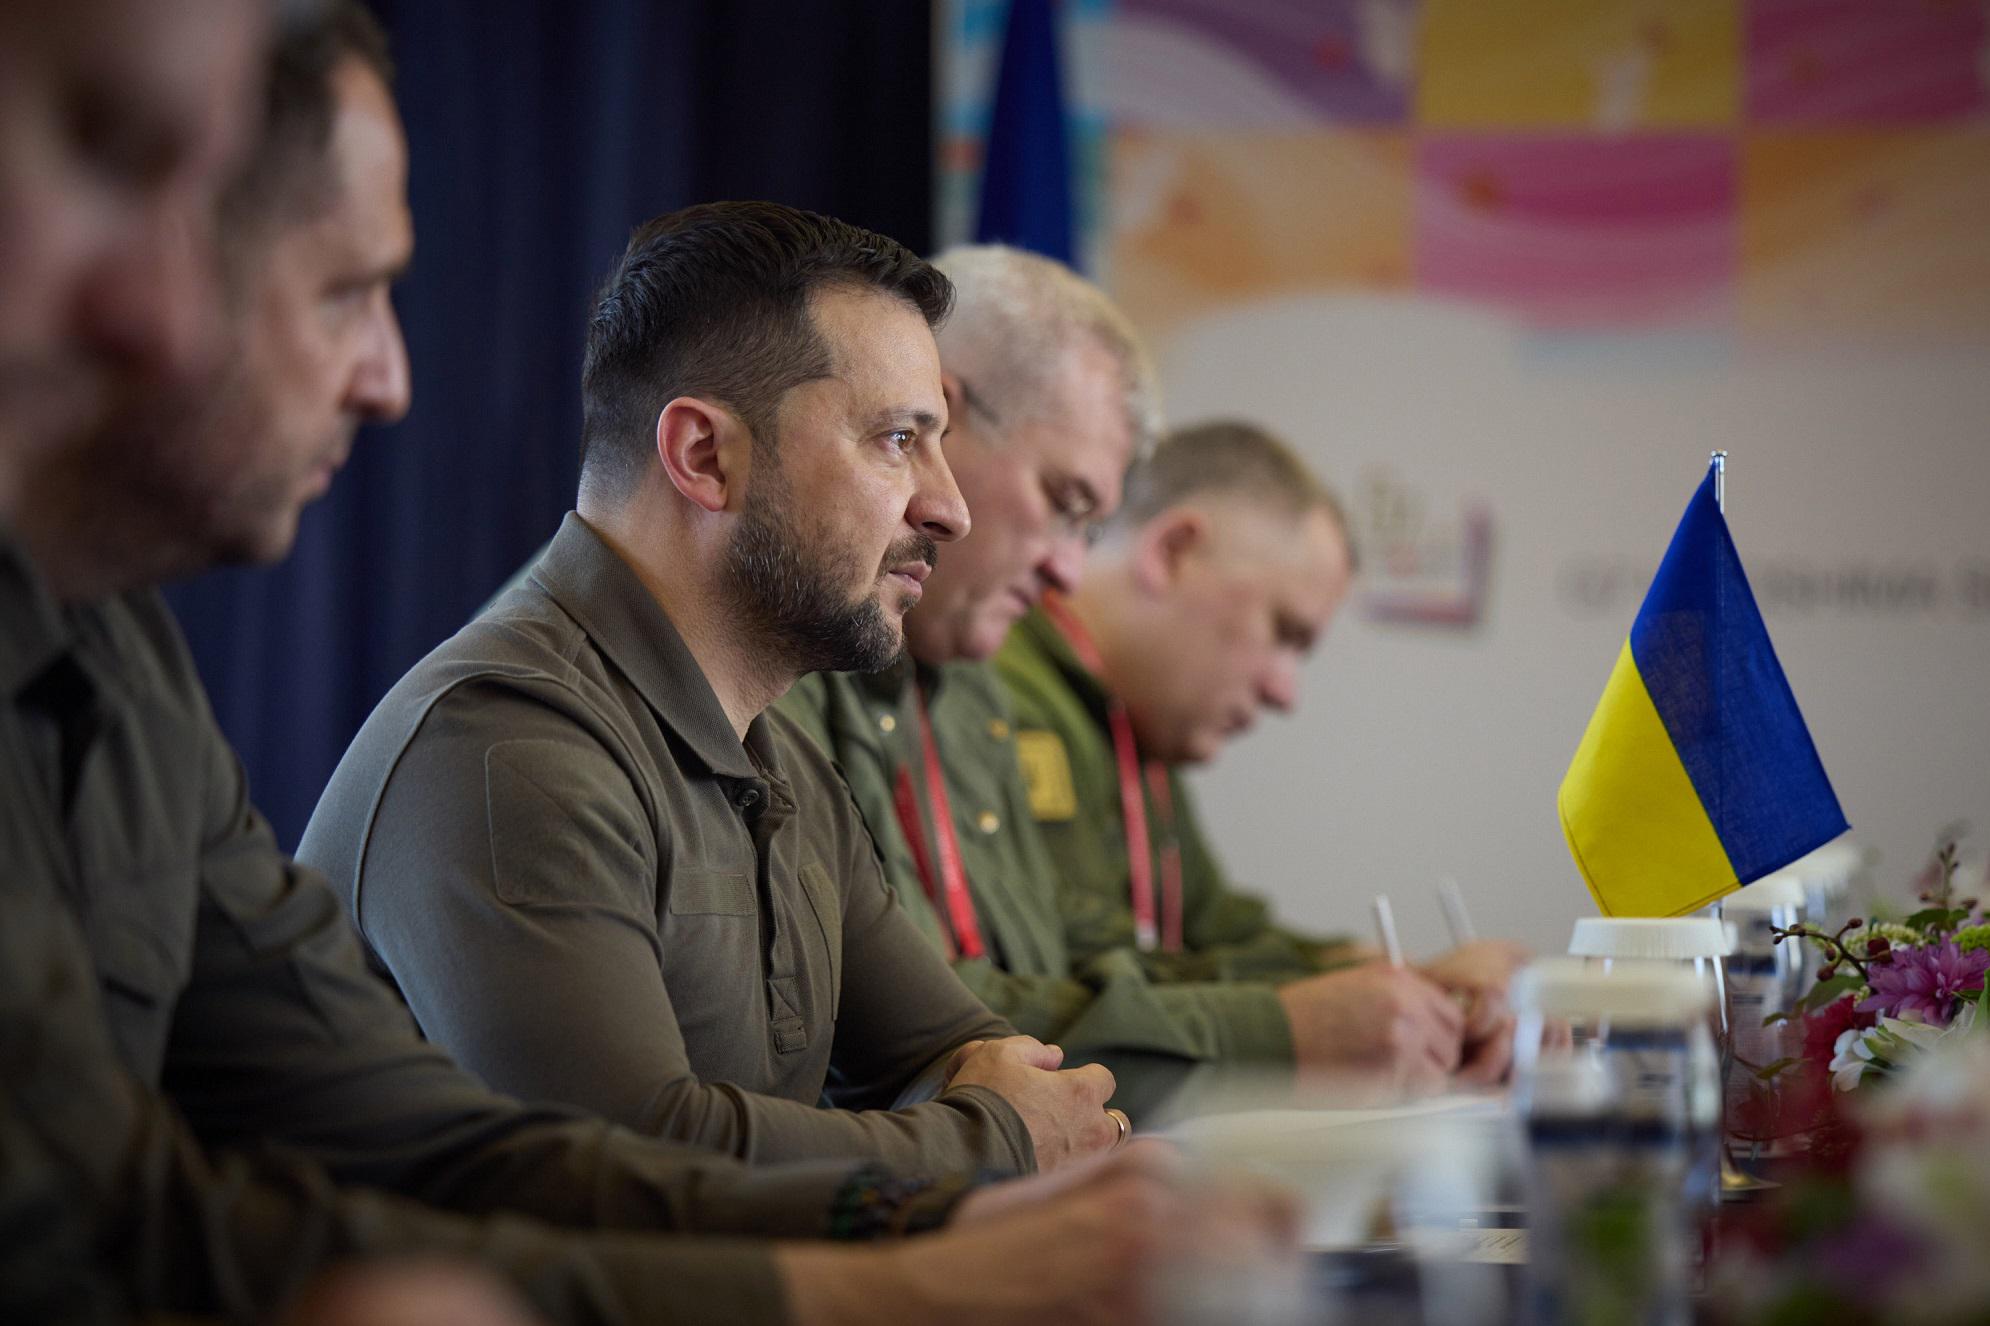 Ucraina-Russia, Zelensky: "Buone notizie da Bakhmut, Mosca sa che vinceremo"